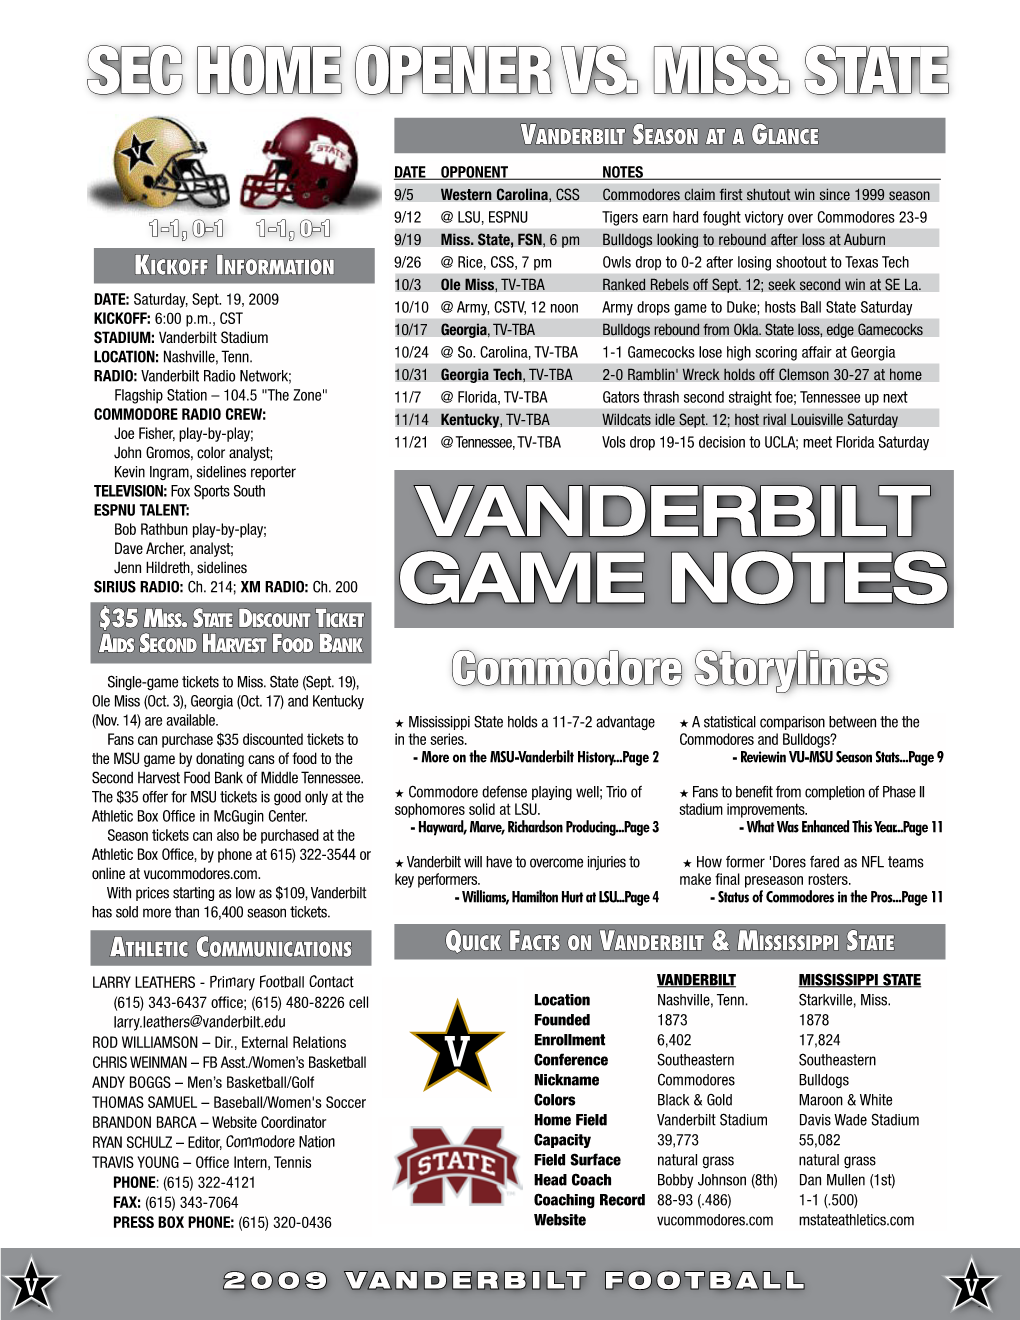 VANDERBILT Game Notes 3 COMMODORE NOTES